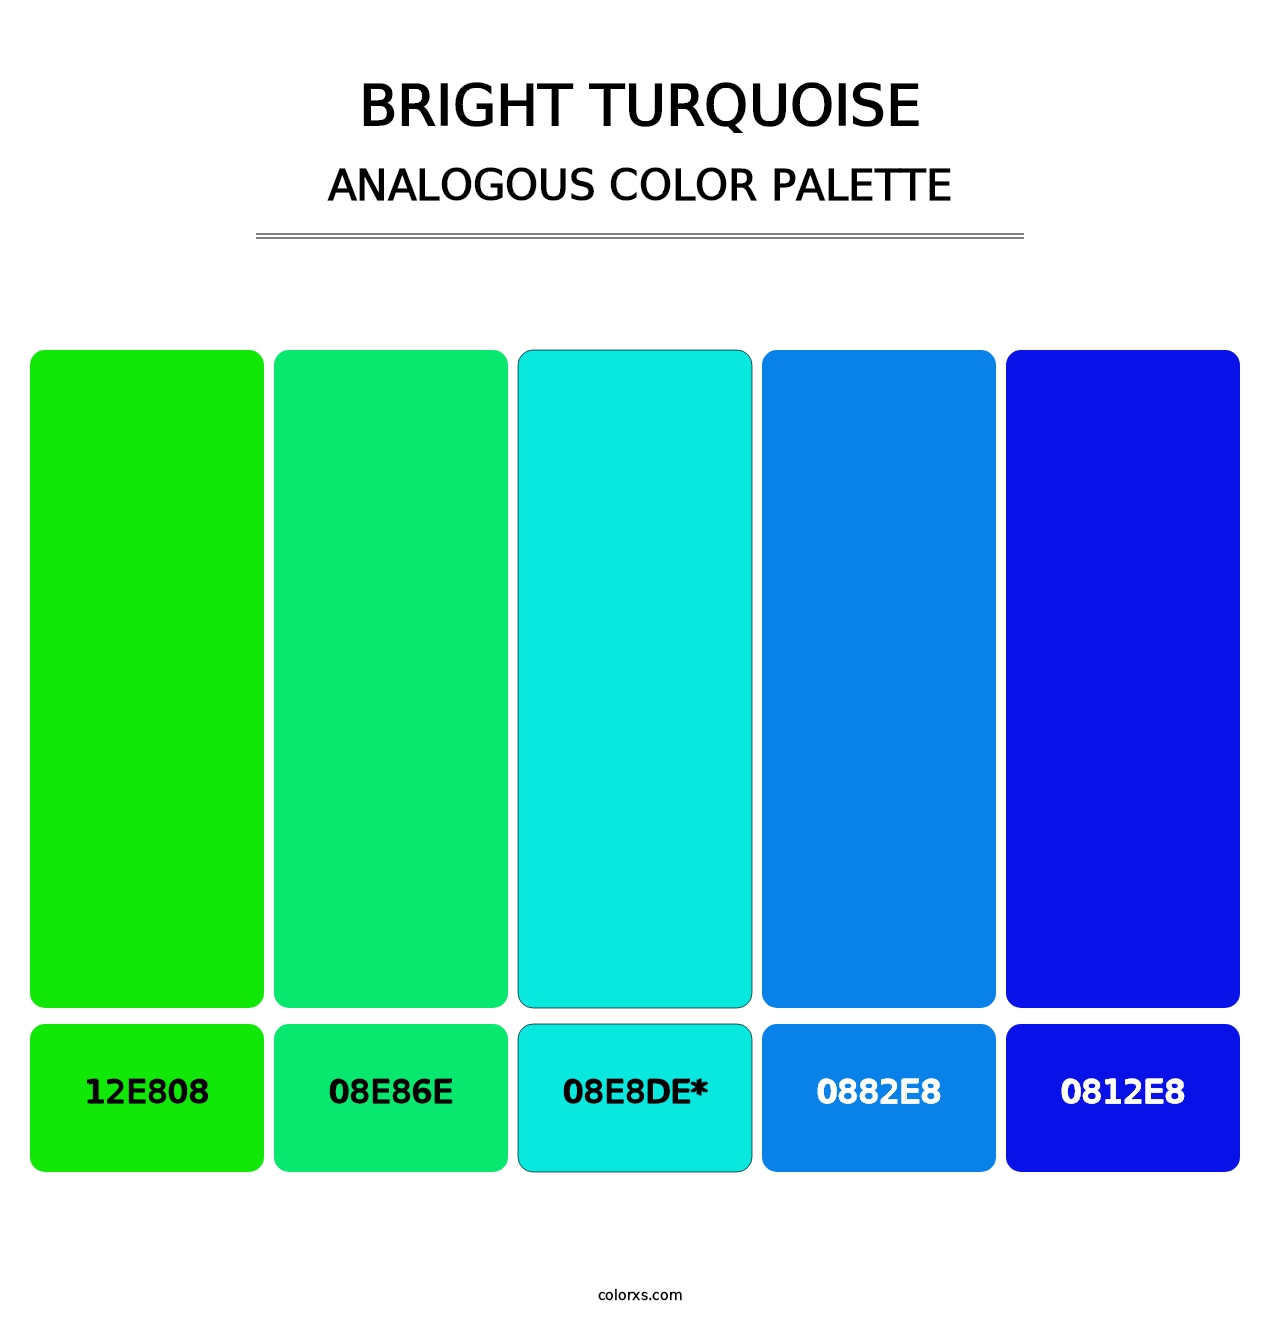 Bright Turquoise - Analogous Color Palette